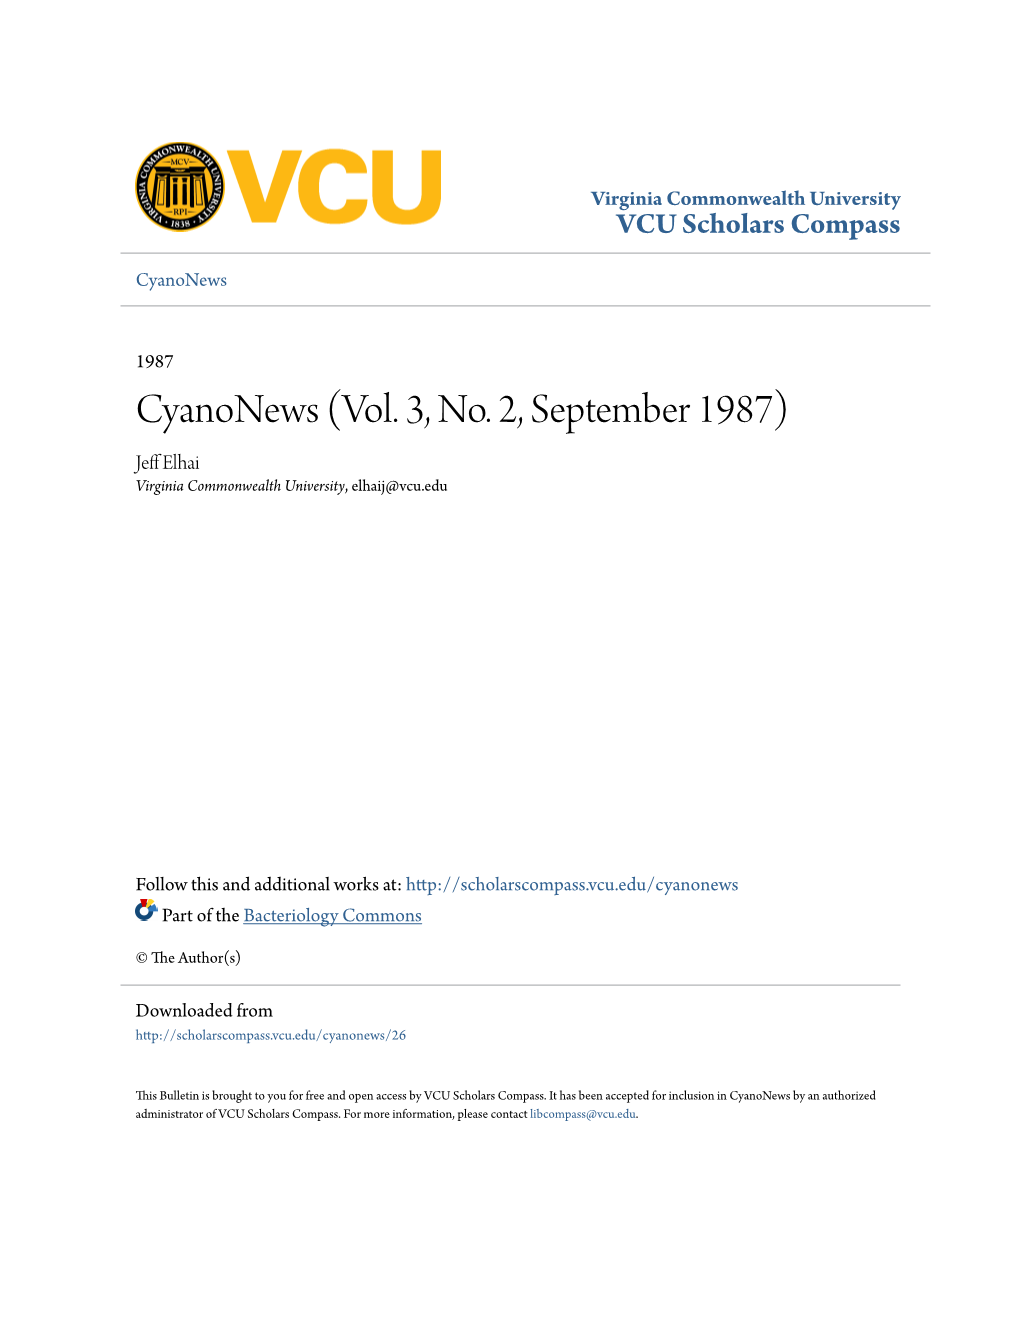 Cyanonews (Vol. 3, No. 2, September 1987) Jeff Le Hai Virginia Commonwealth University, Elhaij@Vcu.Edu